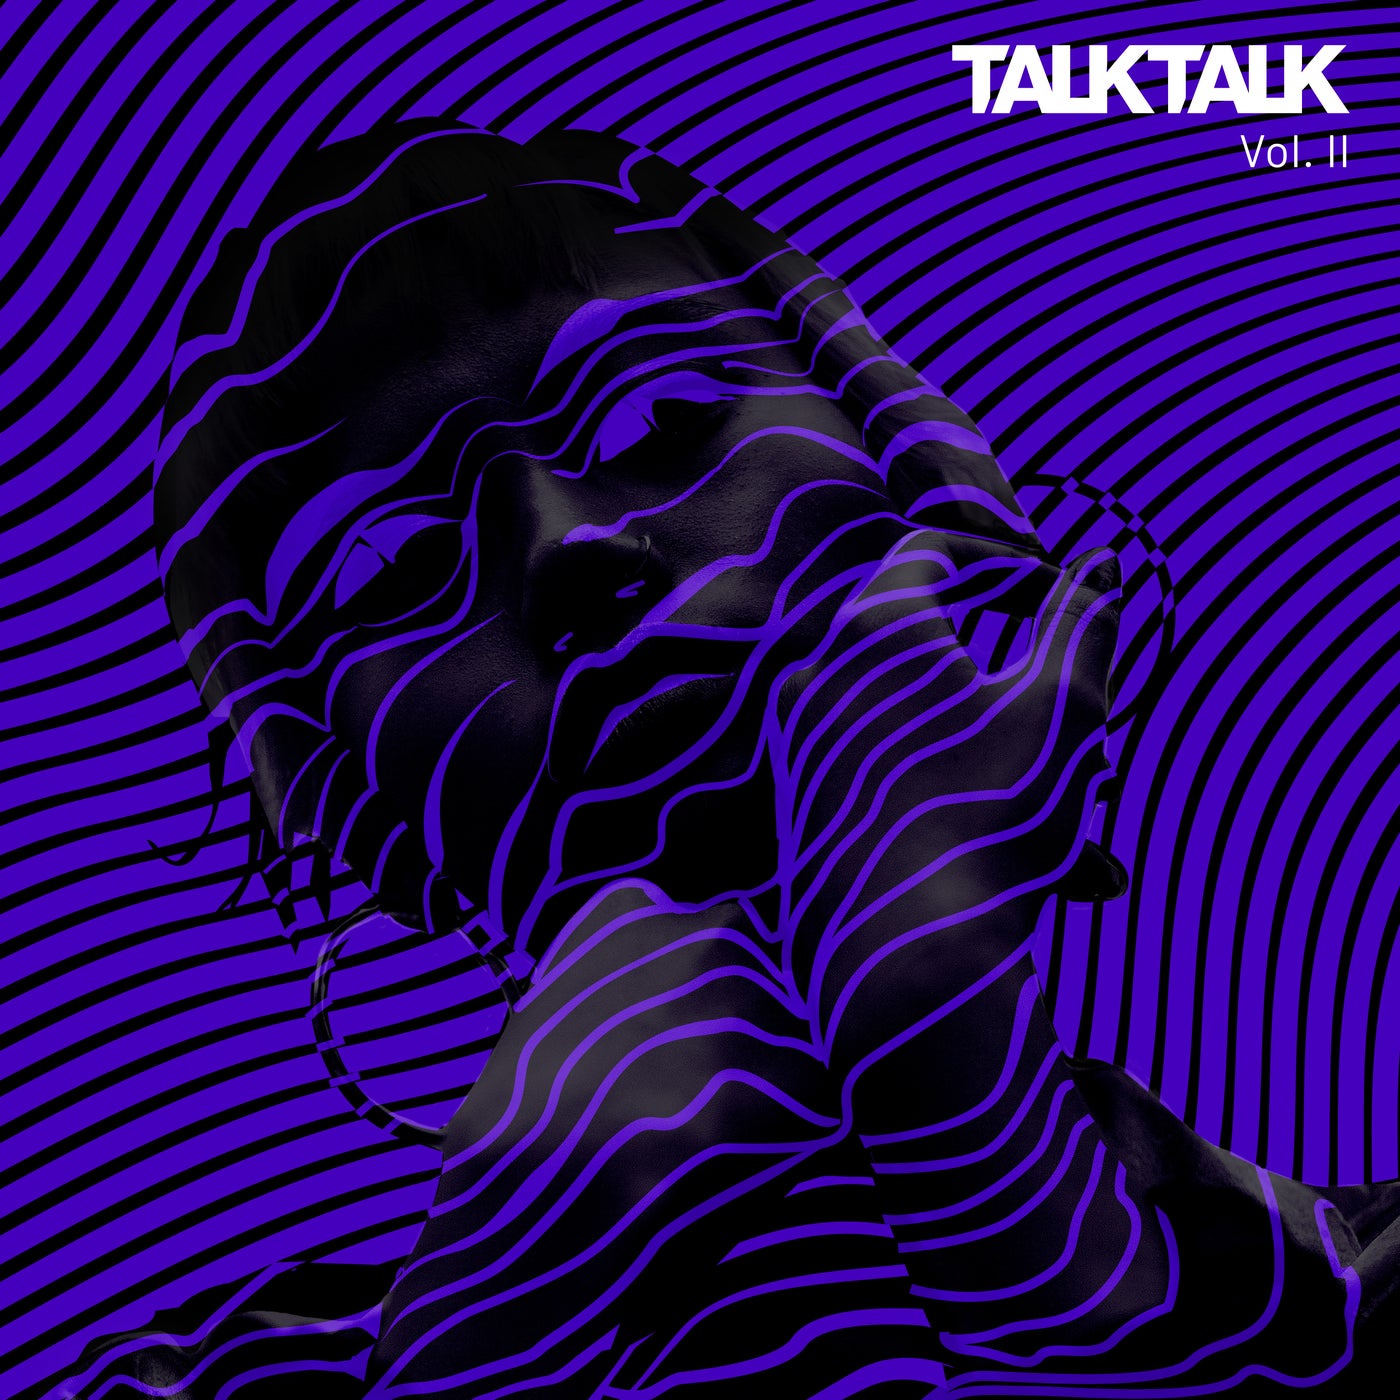 Bar 25 Music presents: TalkTalk Vol.2